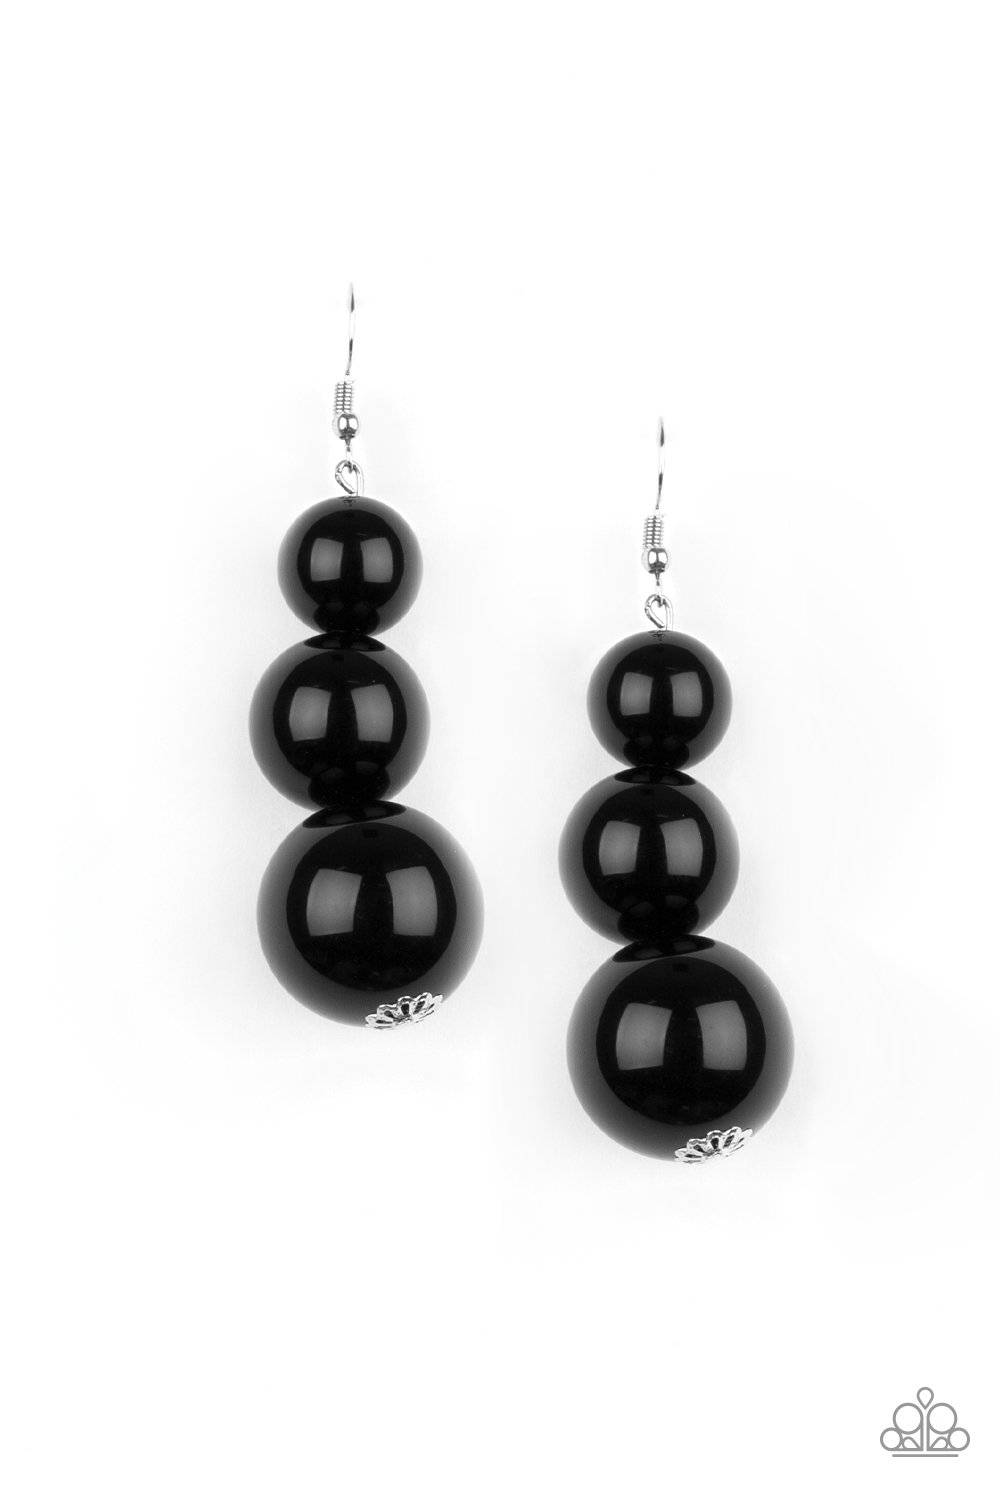 Material World - Black Earrings - Paparazzi Accessories - GlaMarous Titi Jewels